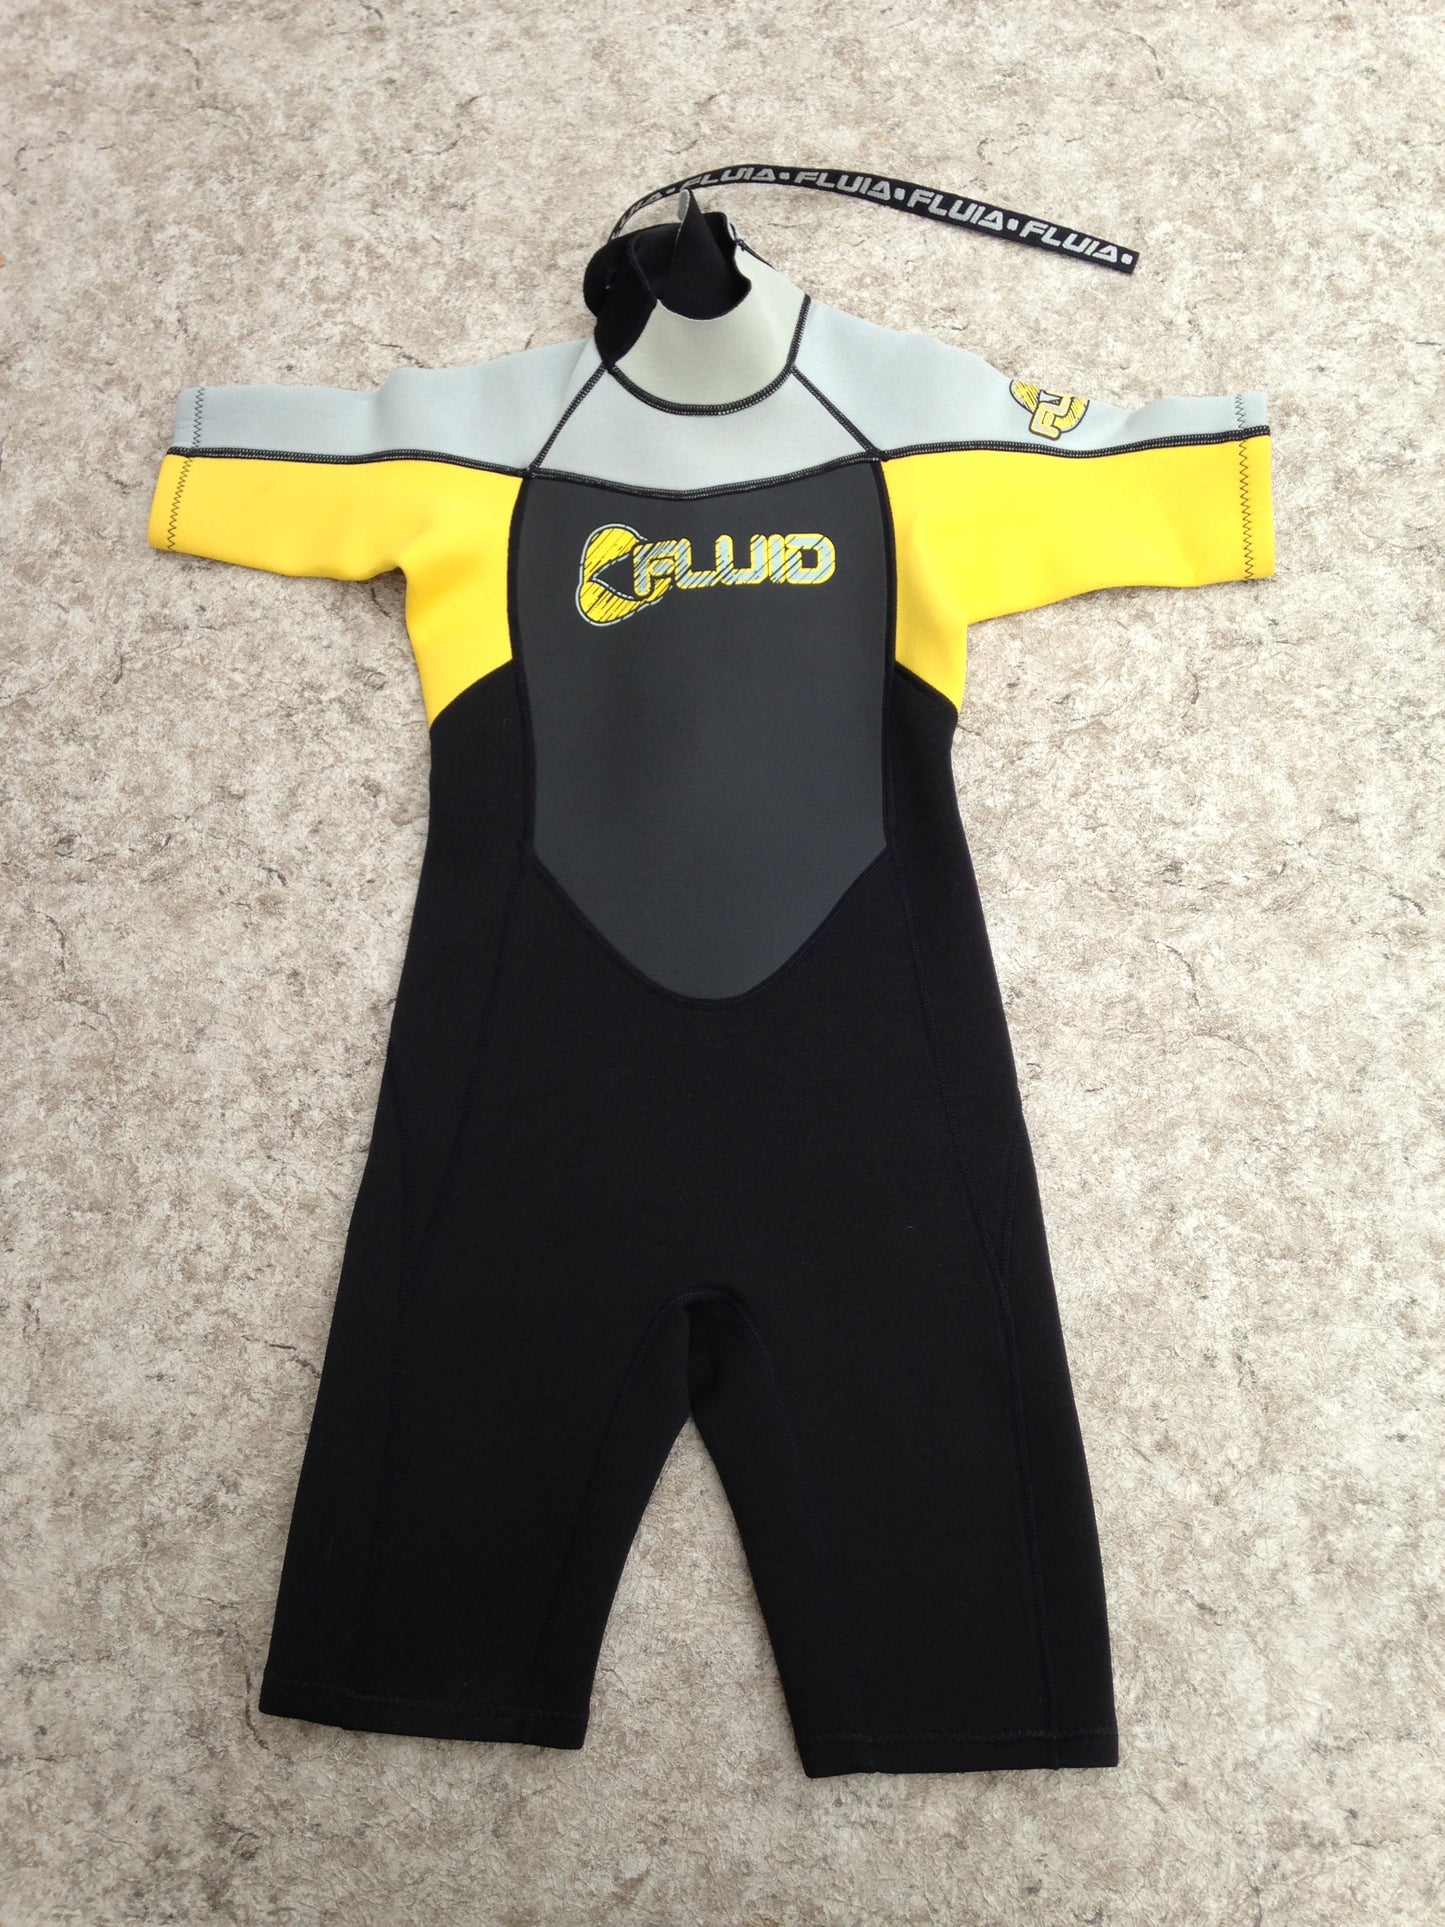 Wetsuit Child Size 10 Fluid  2-3 mm Neoprene Yellow Grey Back New Demo Model